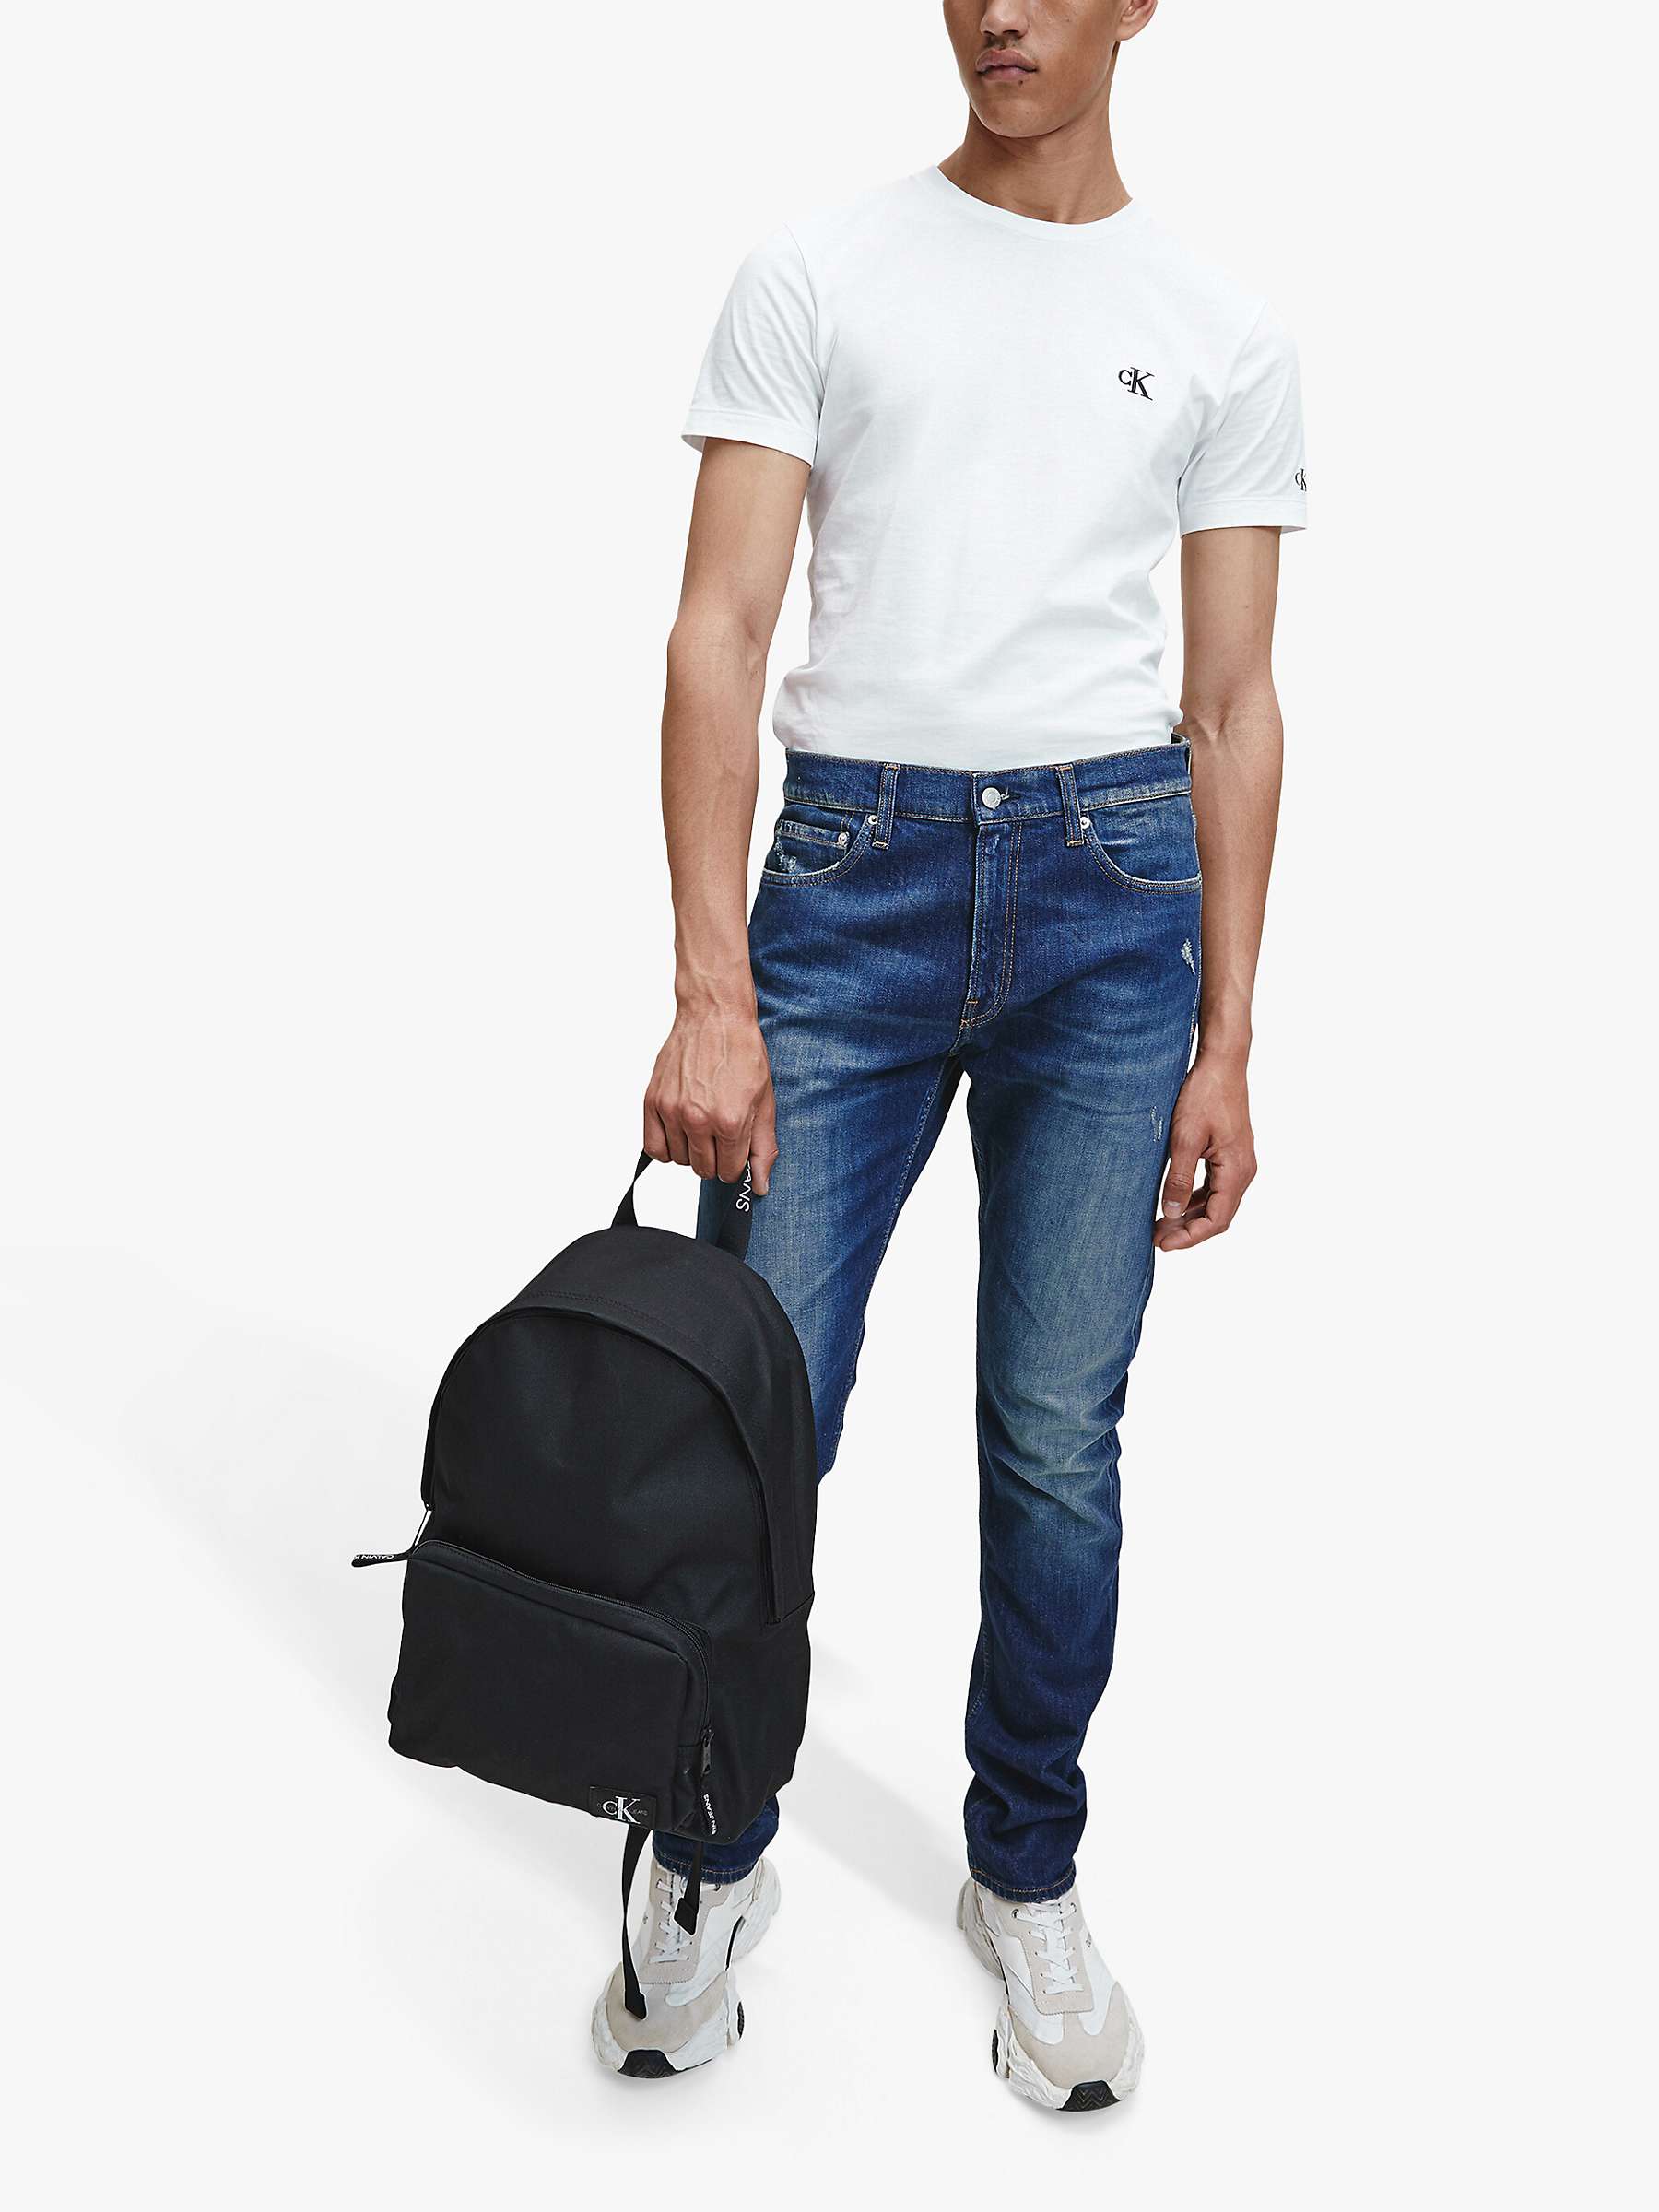 Buy Calvin Klein Jeans Campus Backpack, Black Online at johnlewis.com